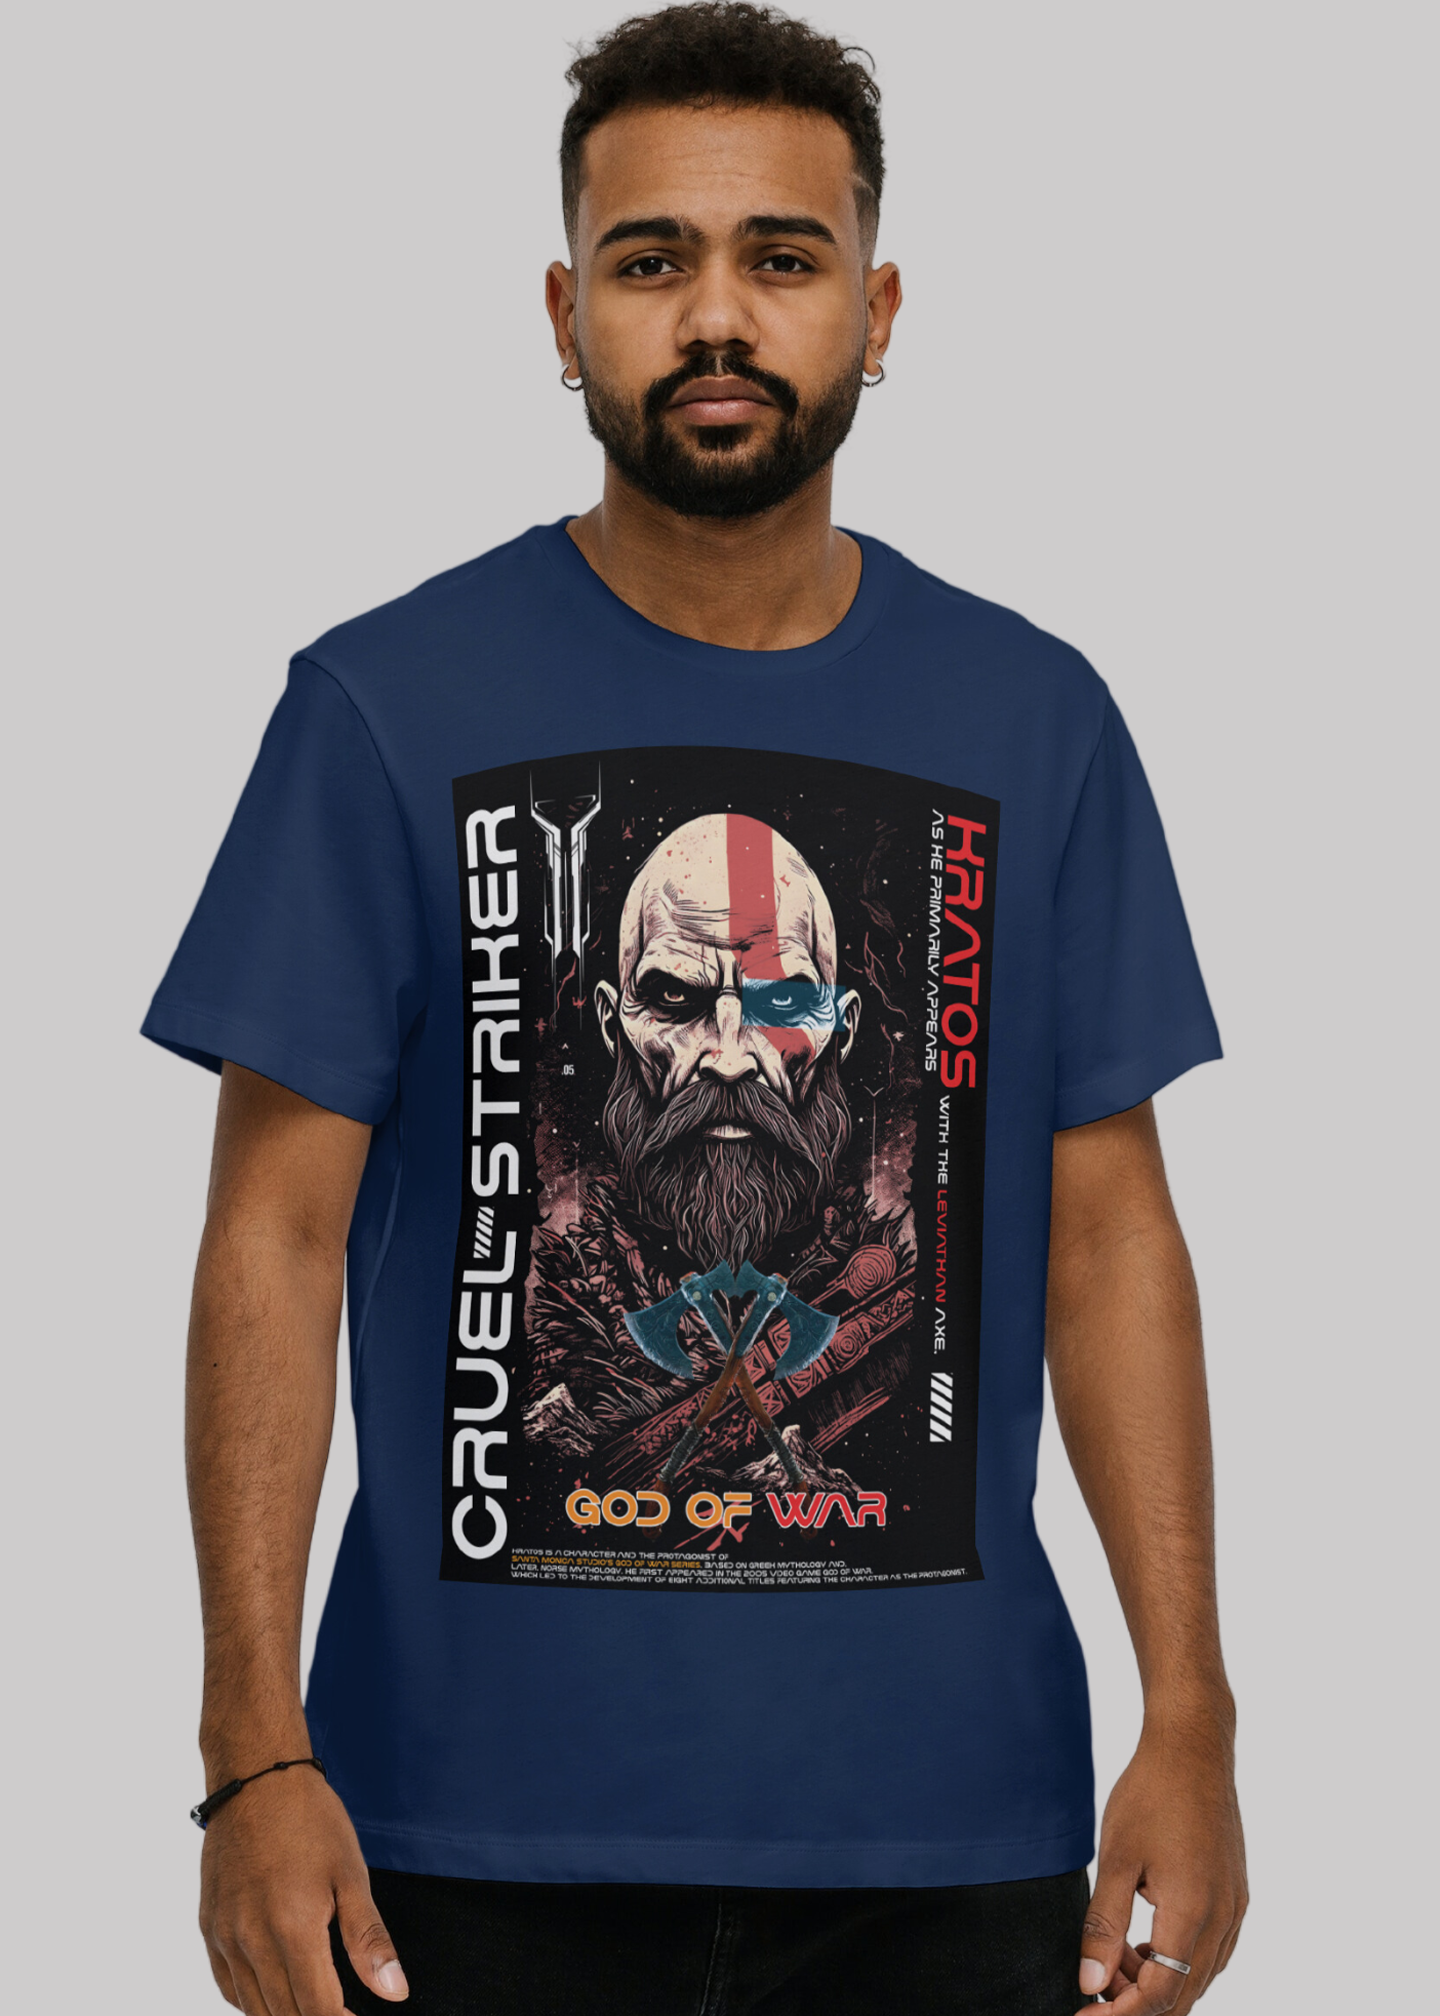 God of war kratos Printed Half Sleeve Premium Cotton T-shirt For Men